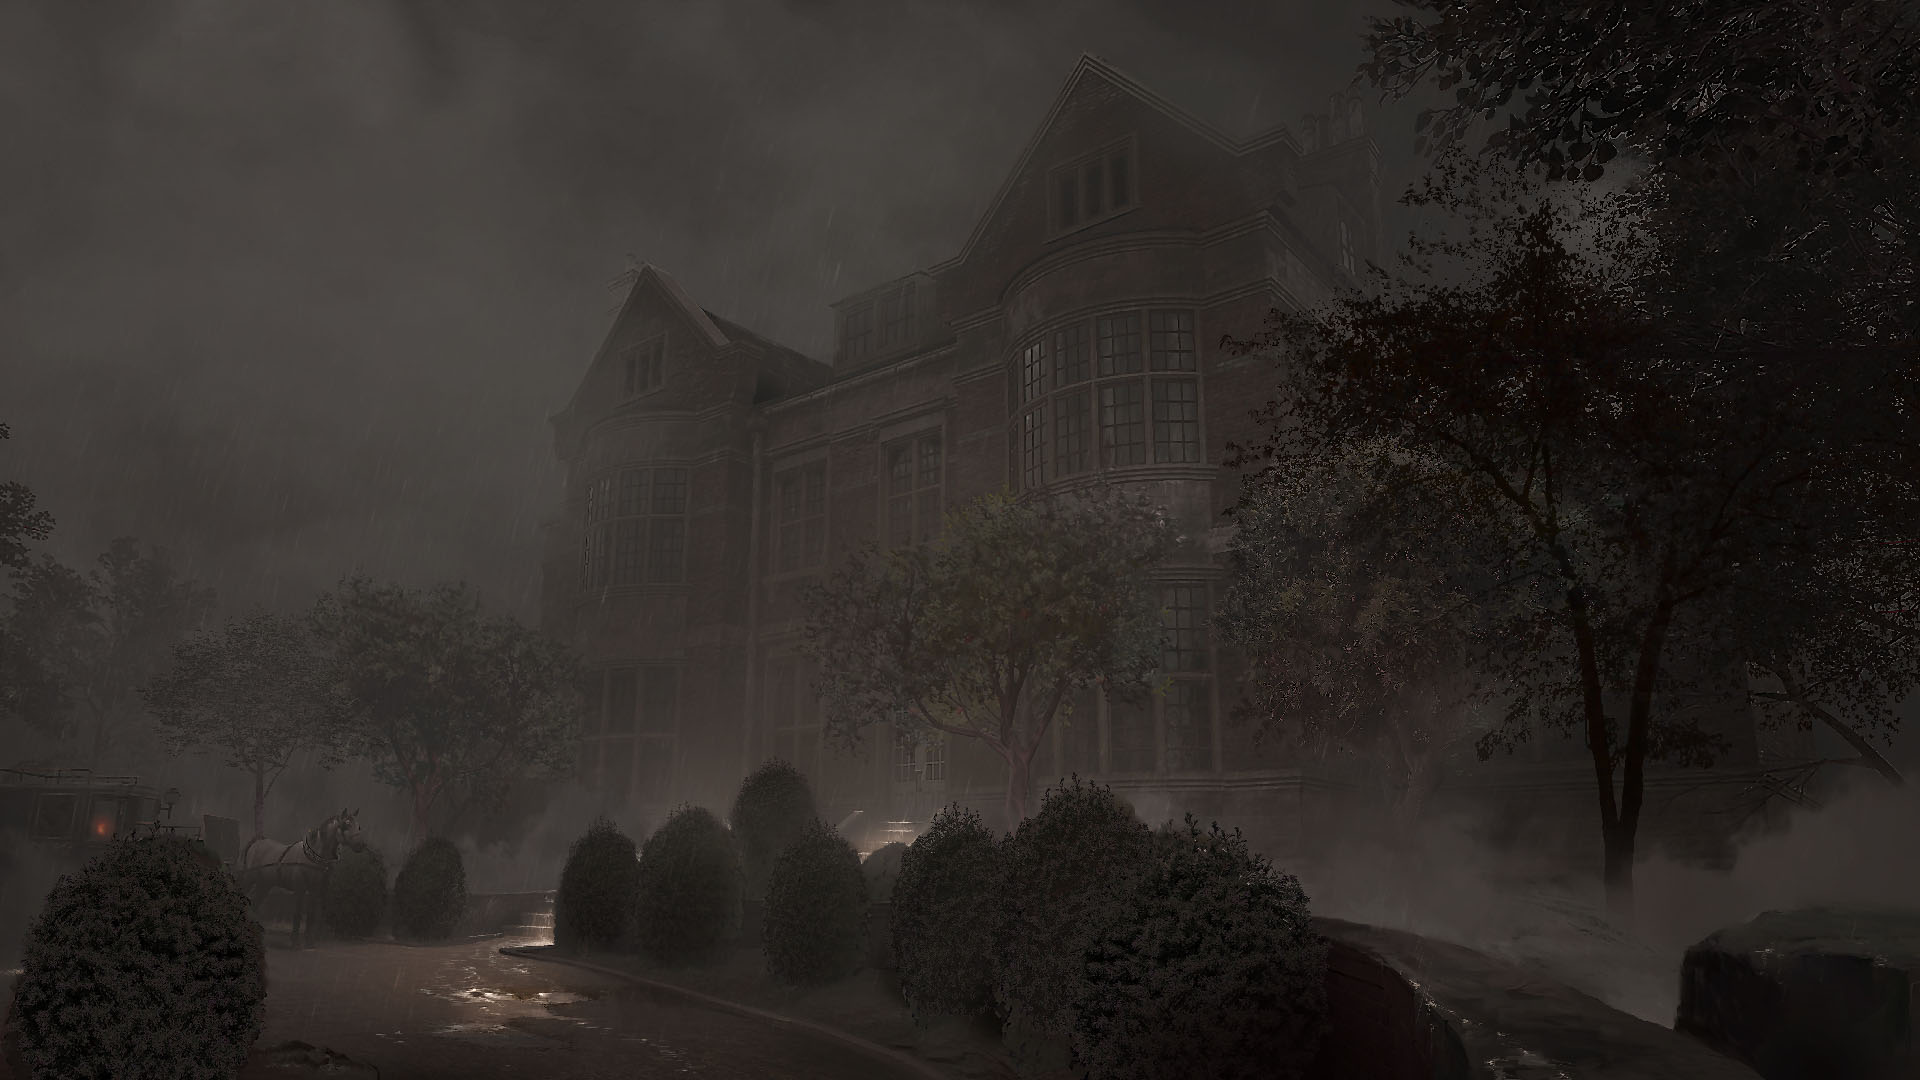 A misty manor